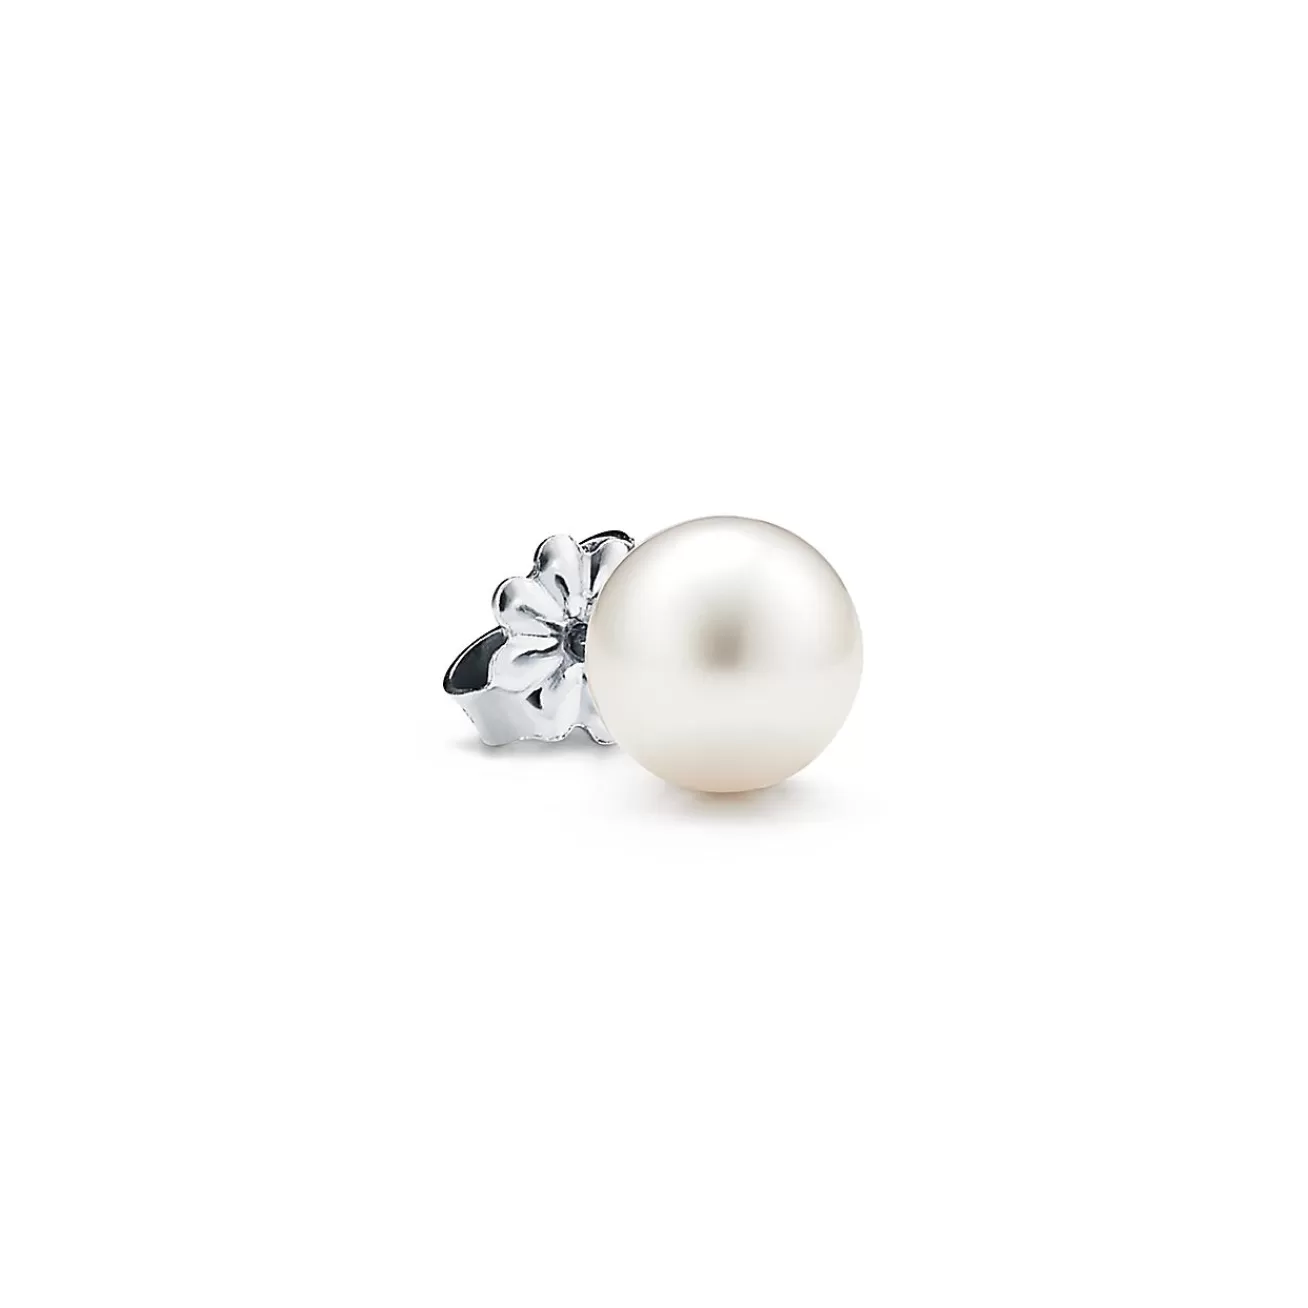 Tiffany & Co. Earrings in sterling silver with freshwater cultured pearls, for pierced ears. Pearls, 8-9 mm. | ^ Earrings | Sterling Silver Jewelry